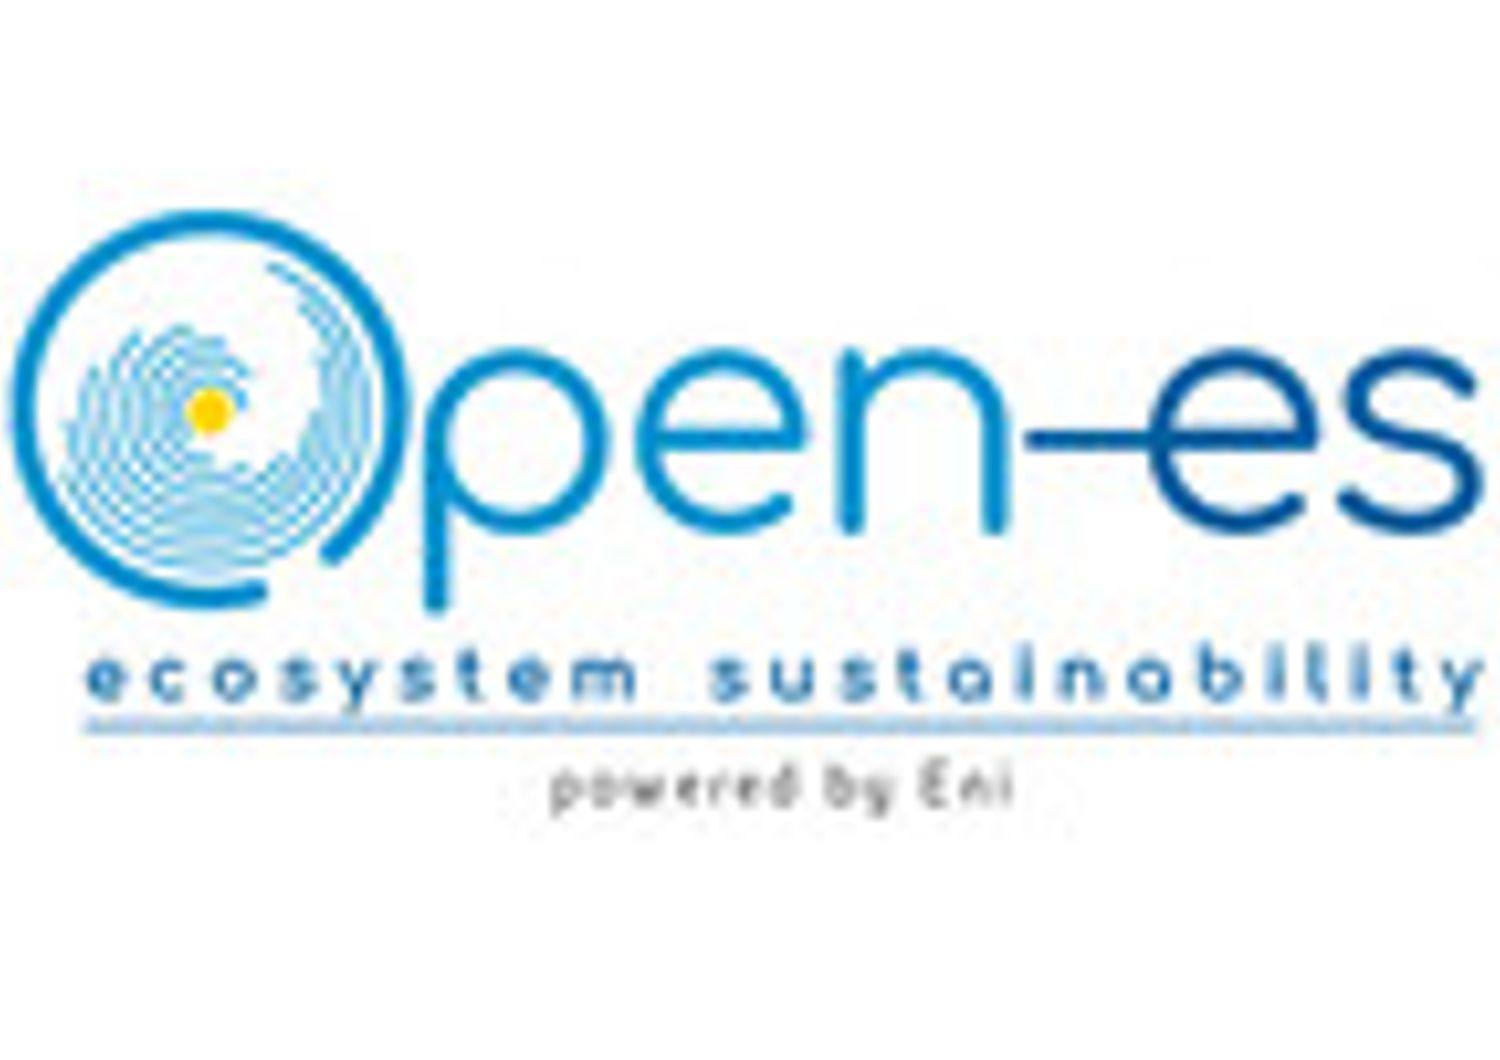 piattaforma Open-es Eni